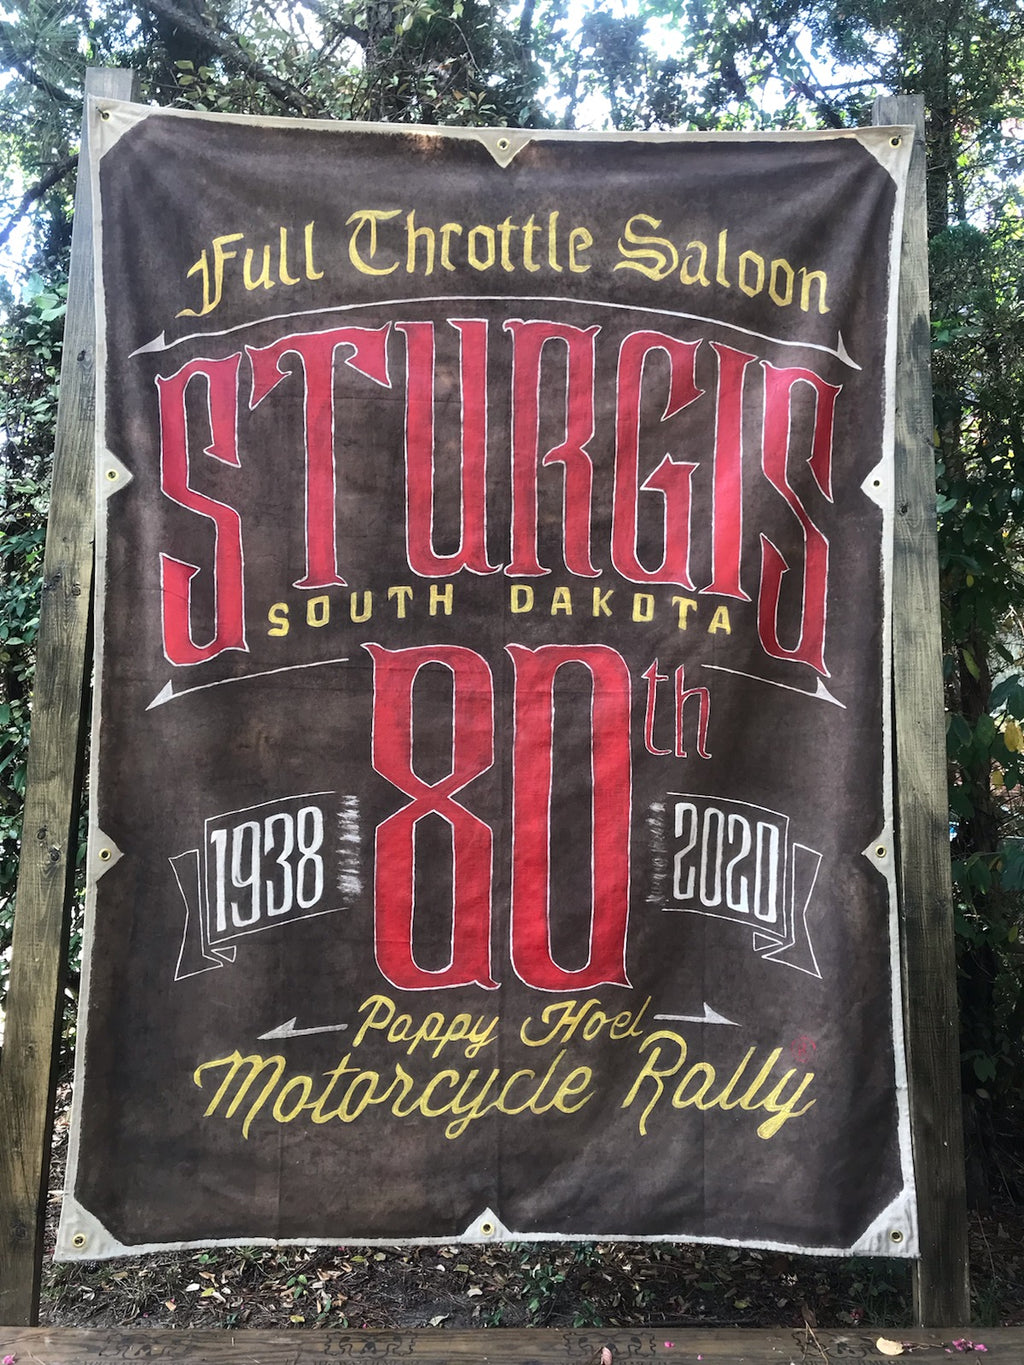 Sturgis 80th Anniversary event banner